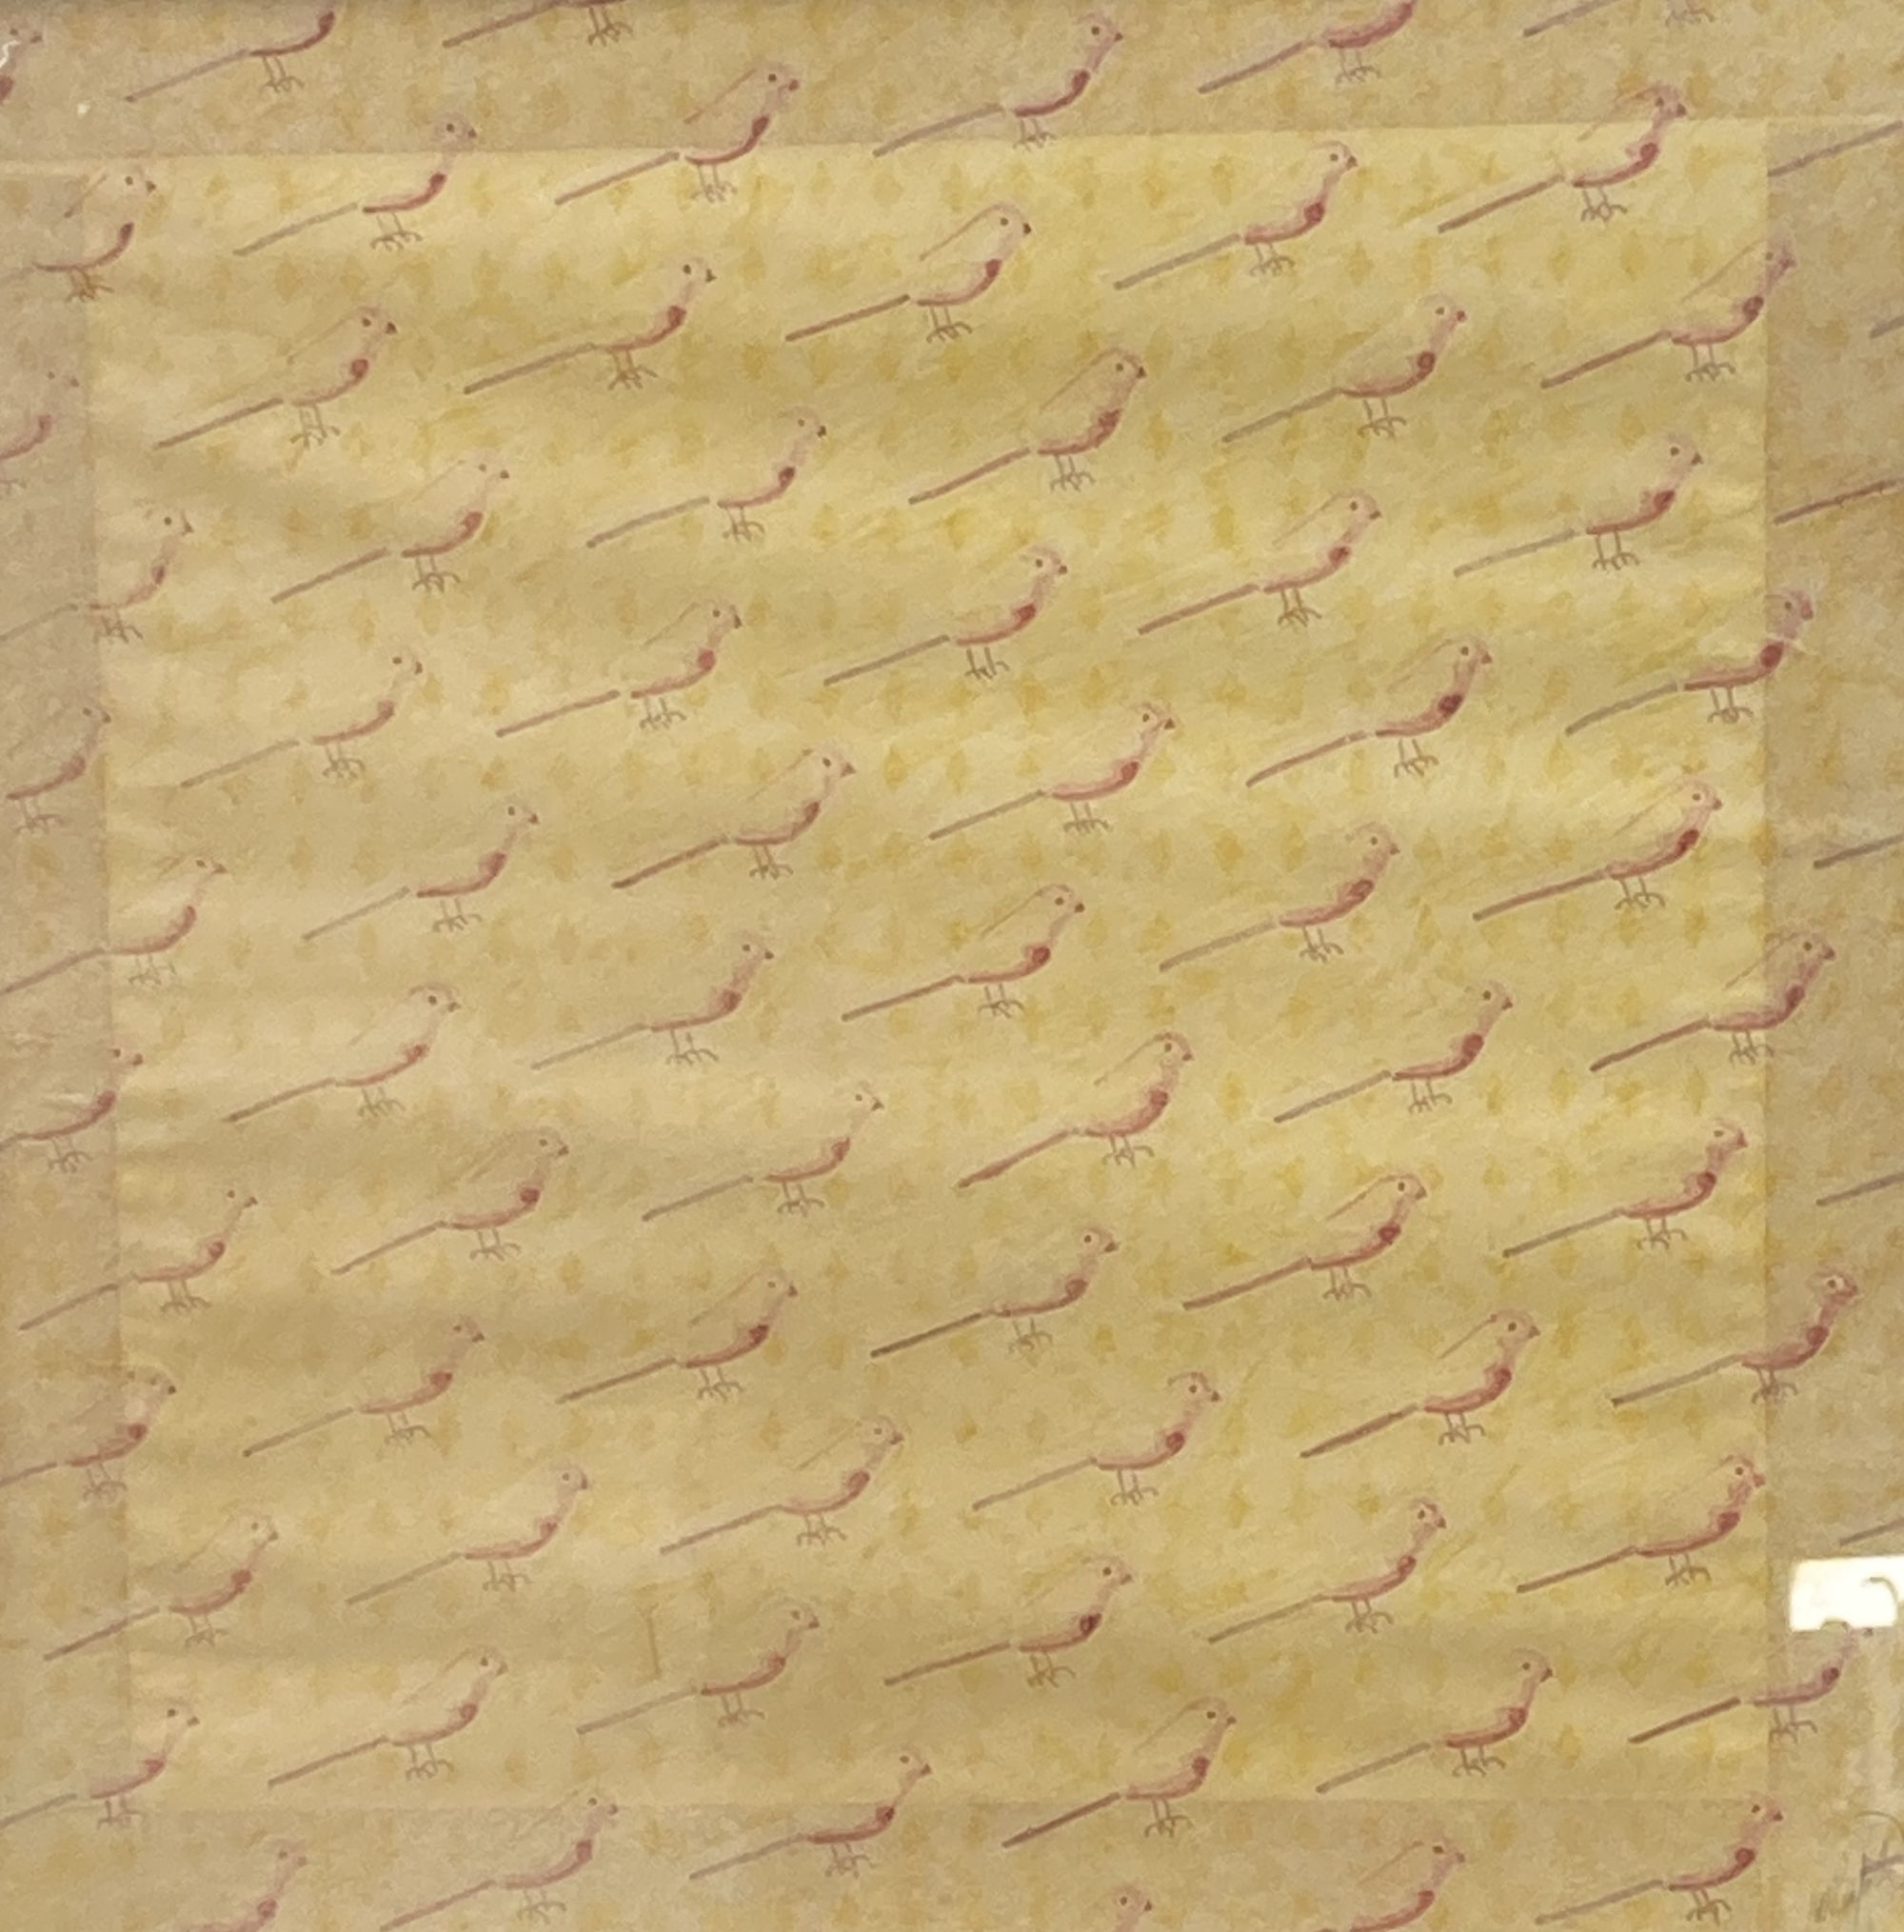 Modern British, watercolour on paper, Bird pattern fabric design, indistinctly signed, 30 x 30cm